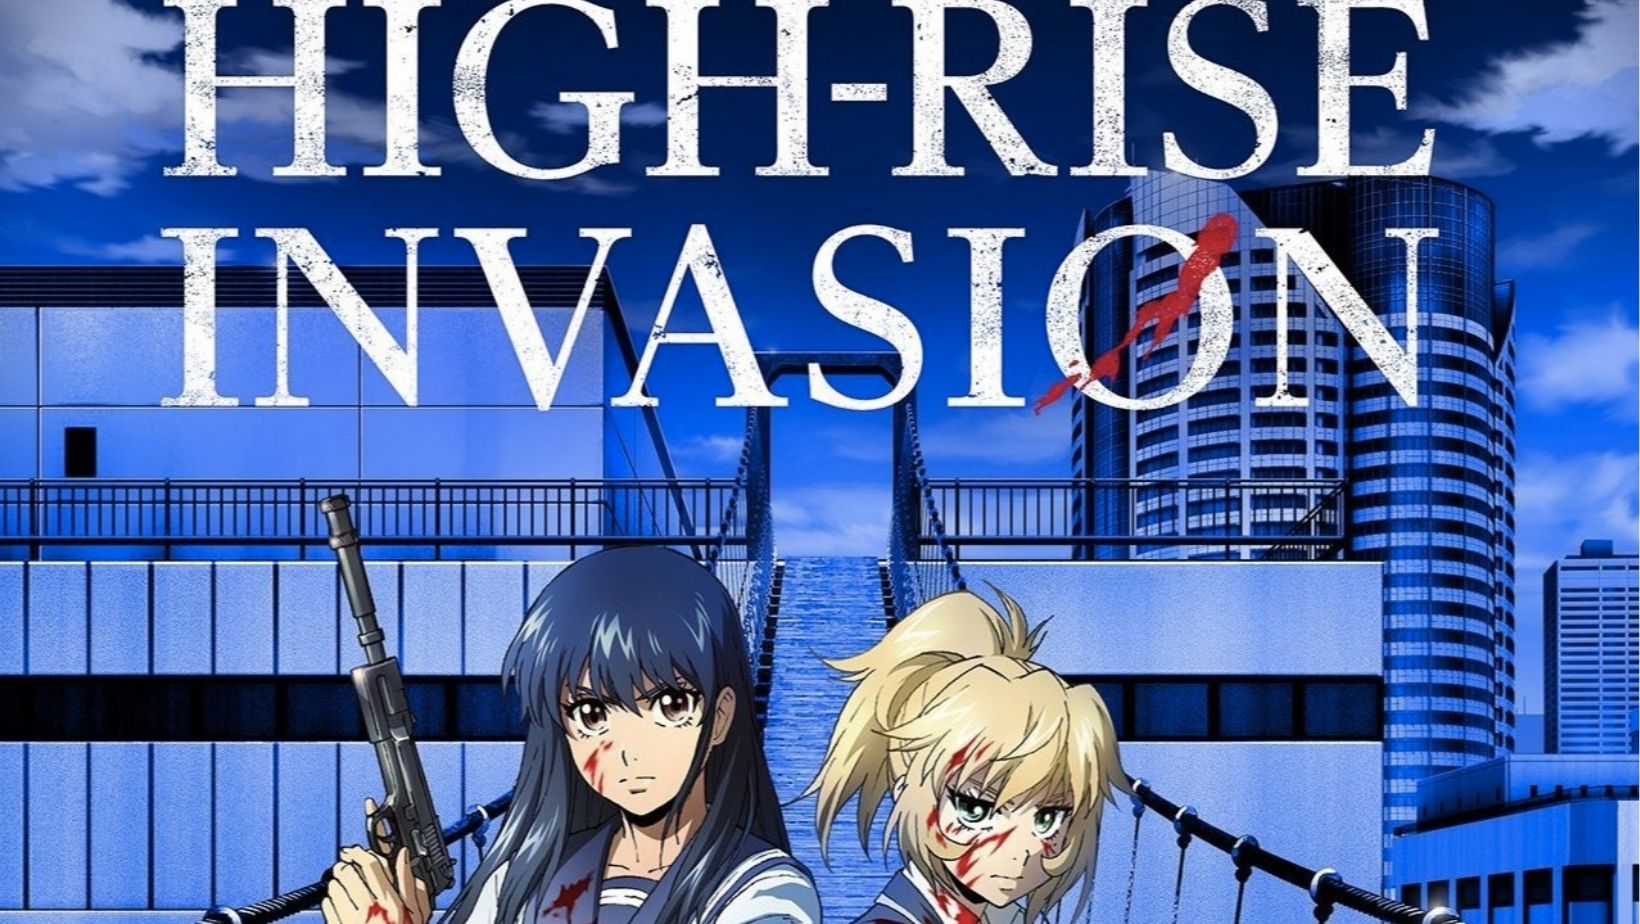 High Rise invasion Season 2